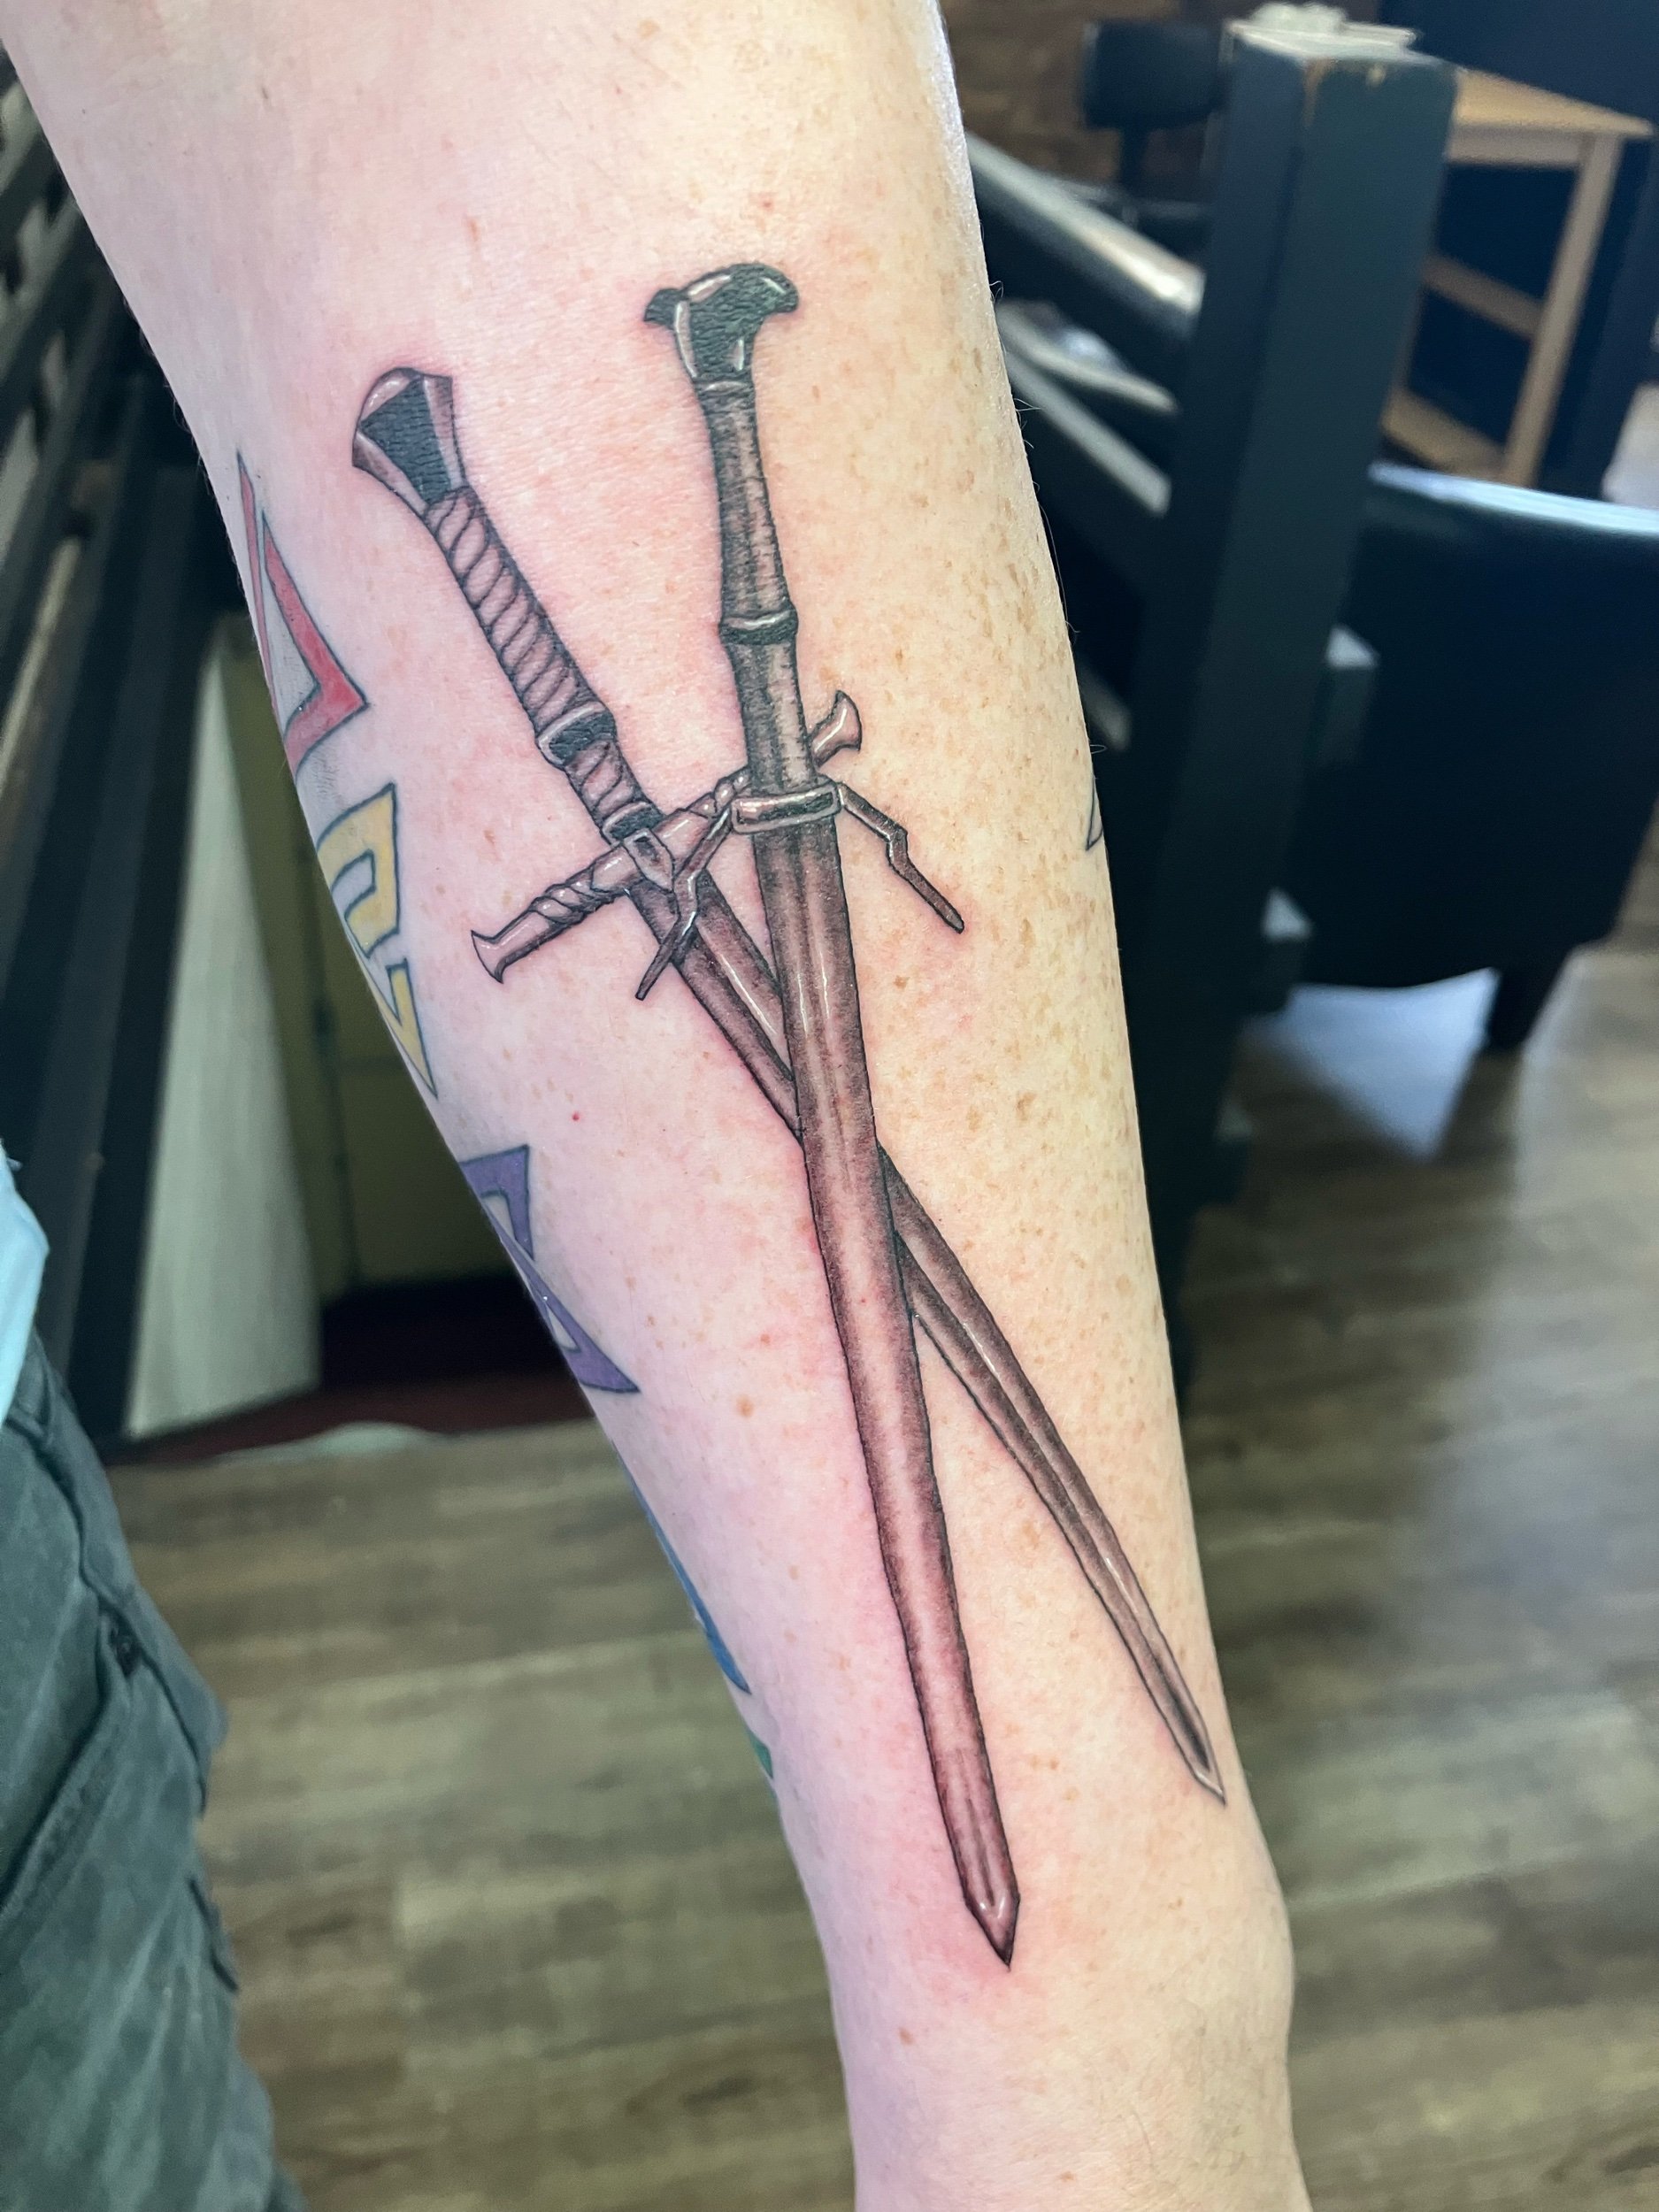 The Witcher swords to start a video  Show Class Tattoo  Facebook